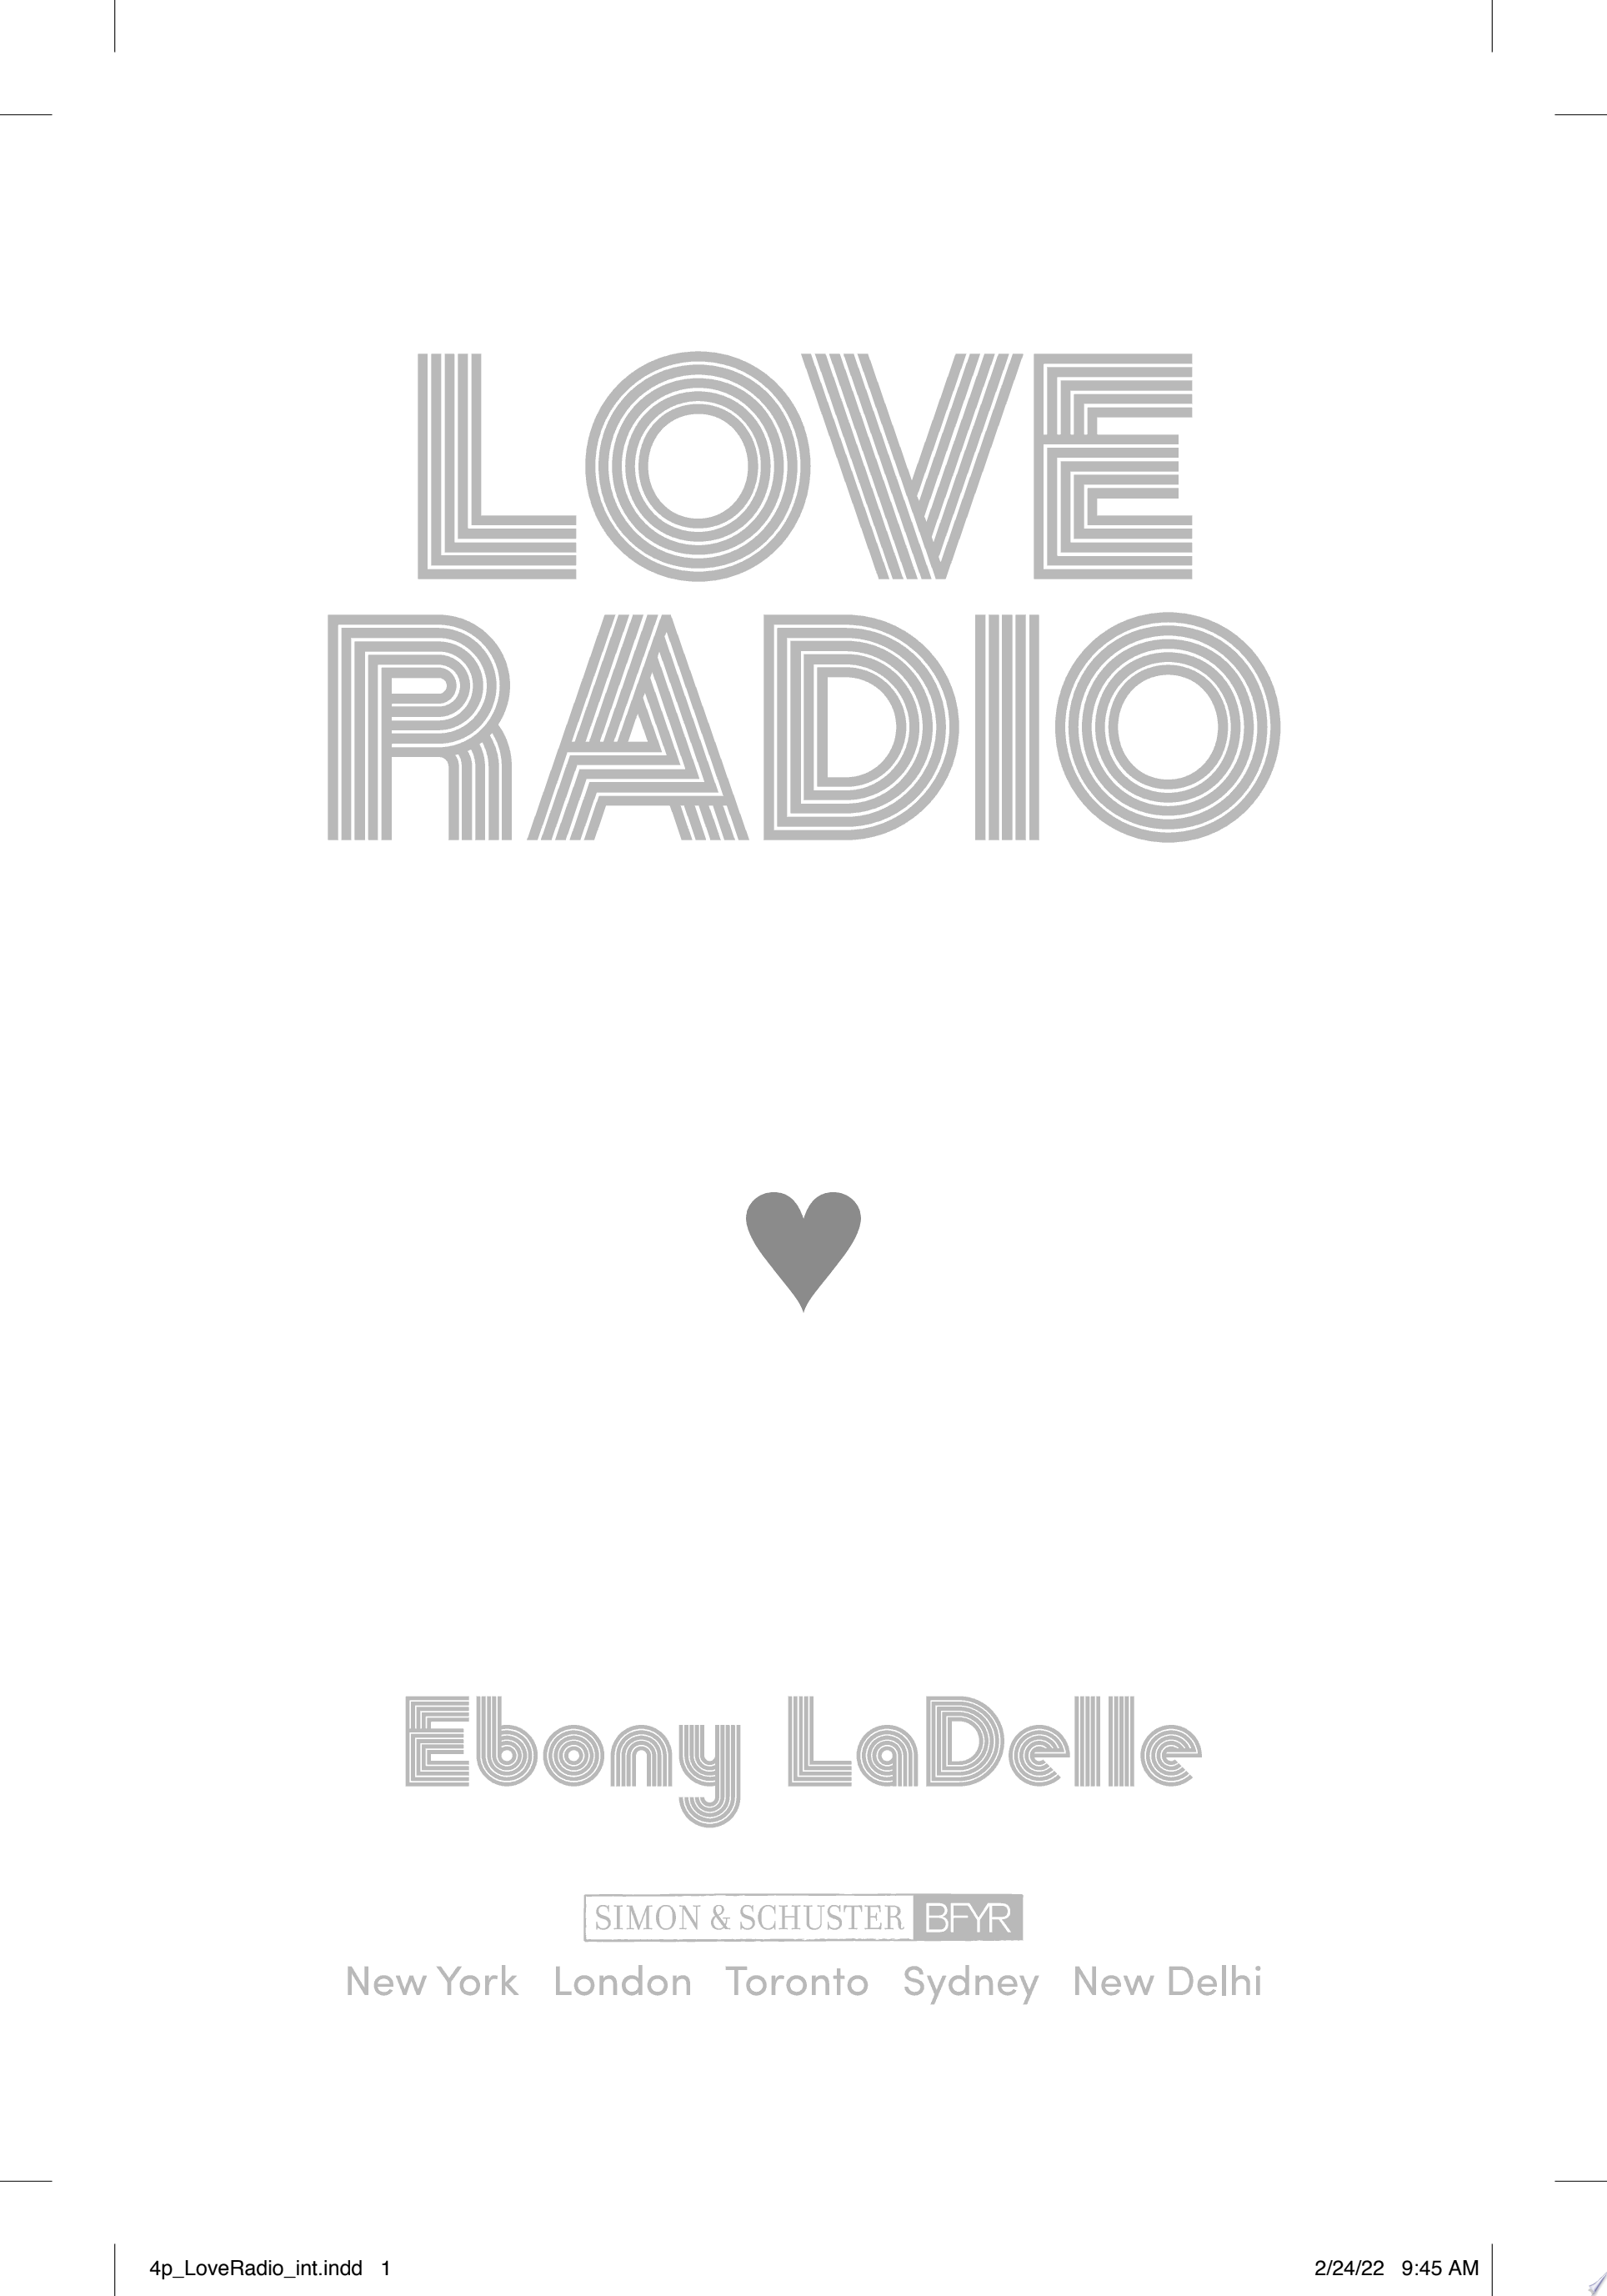 Image for "Love Radio"